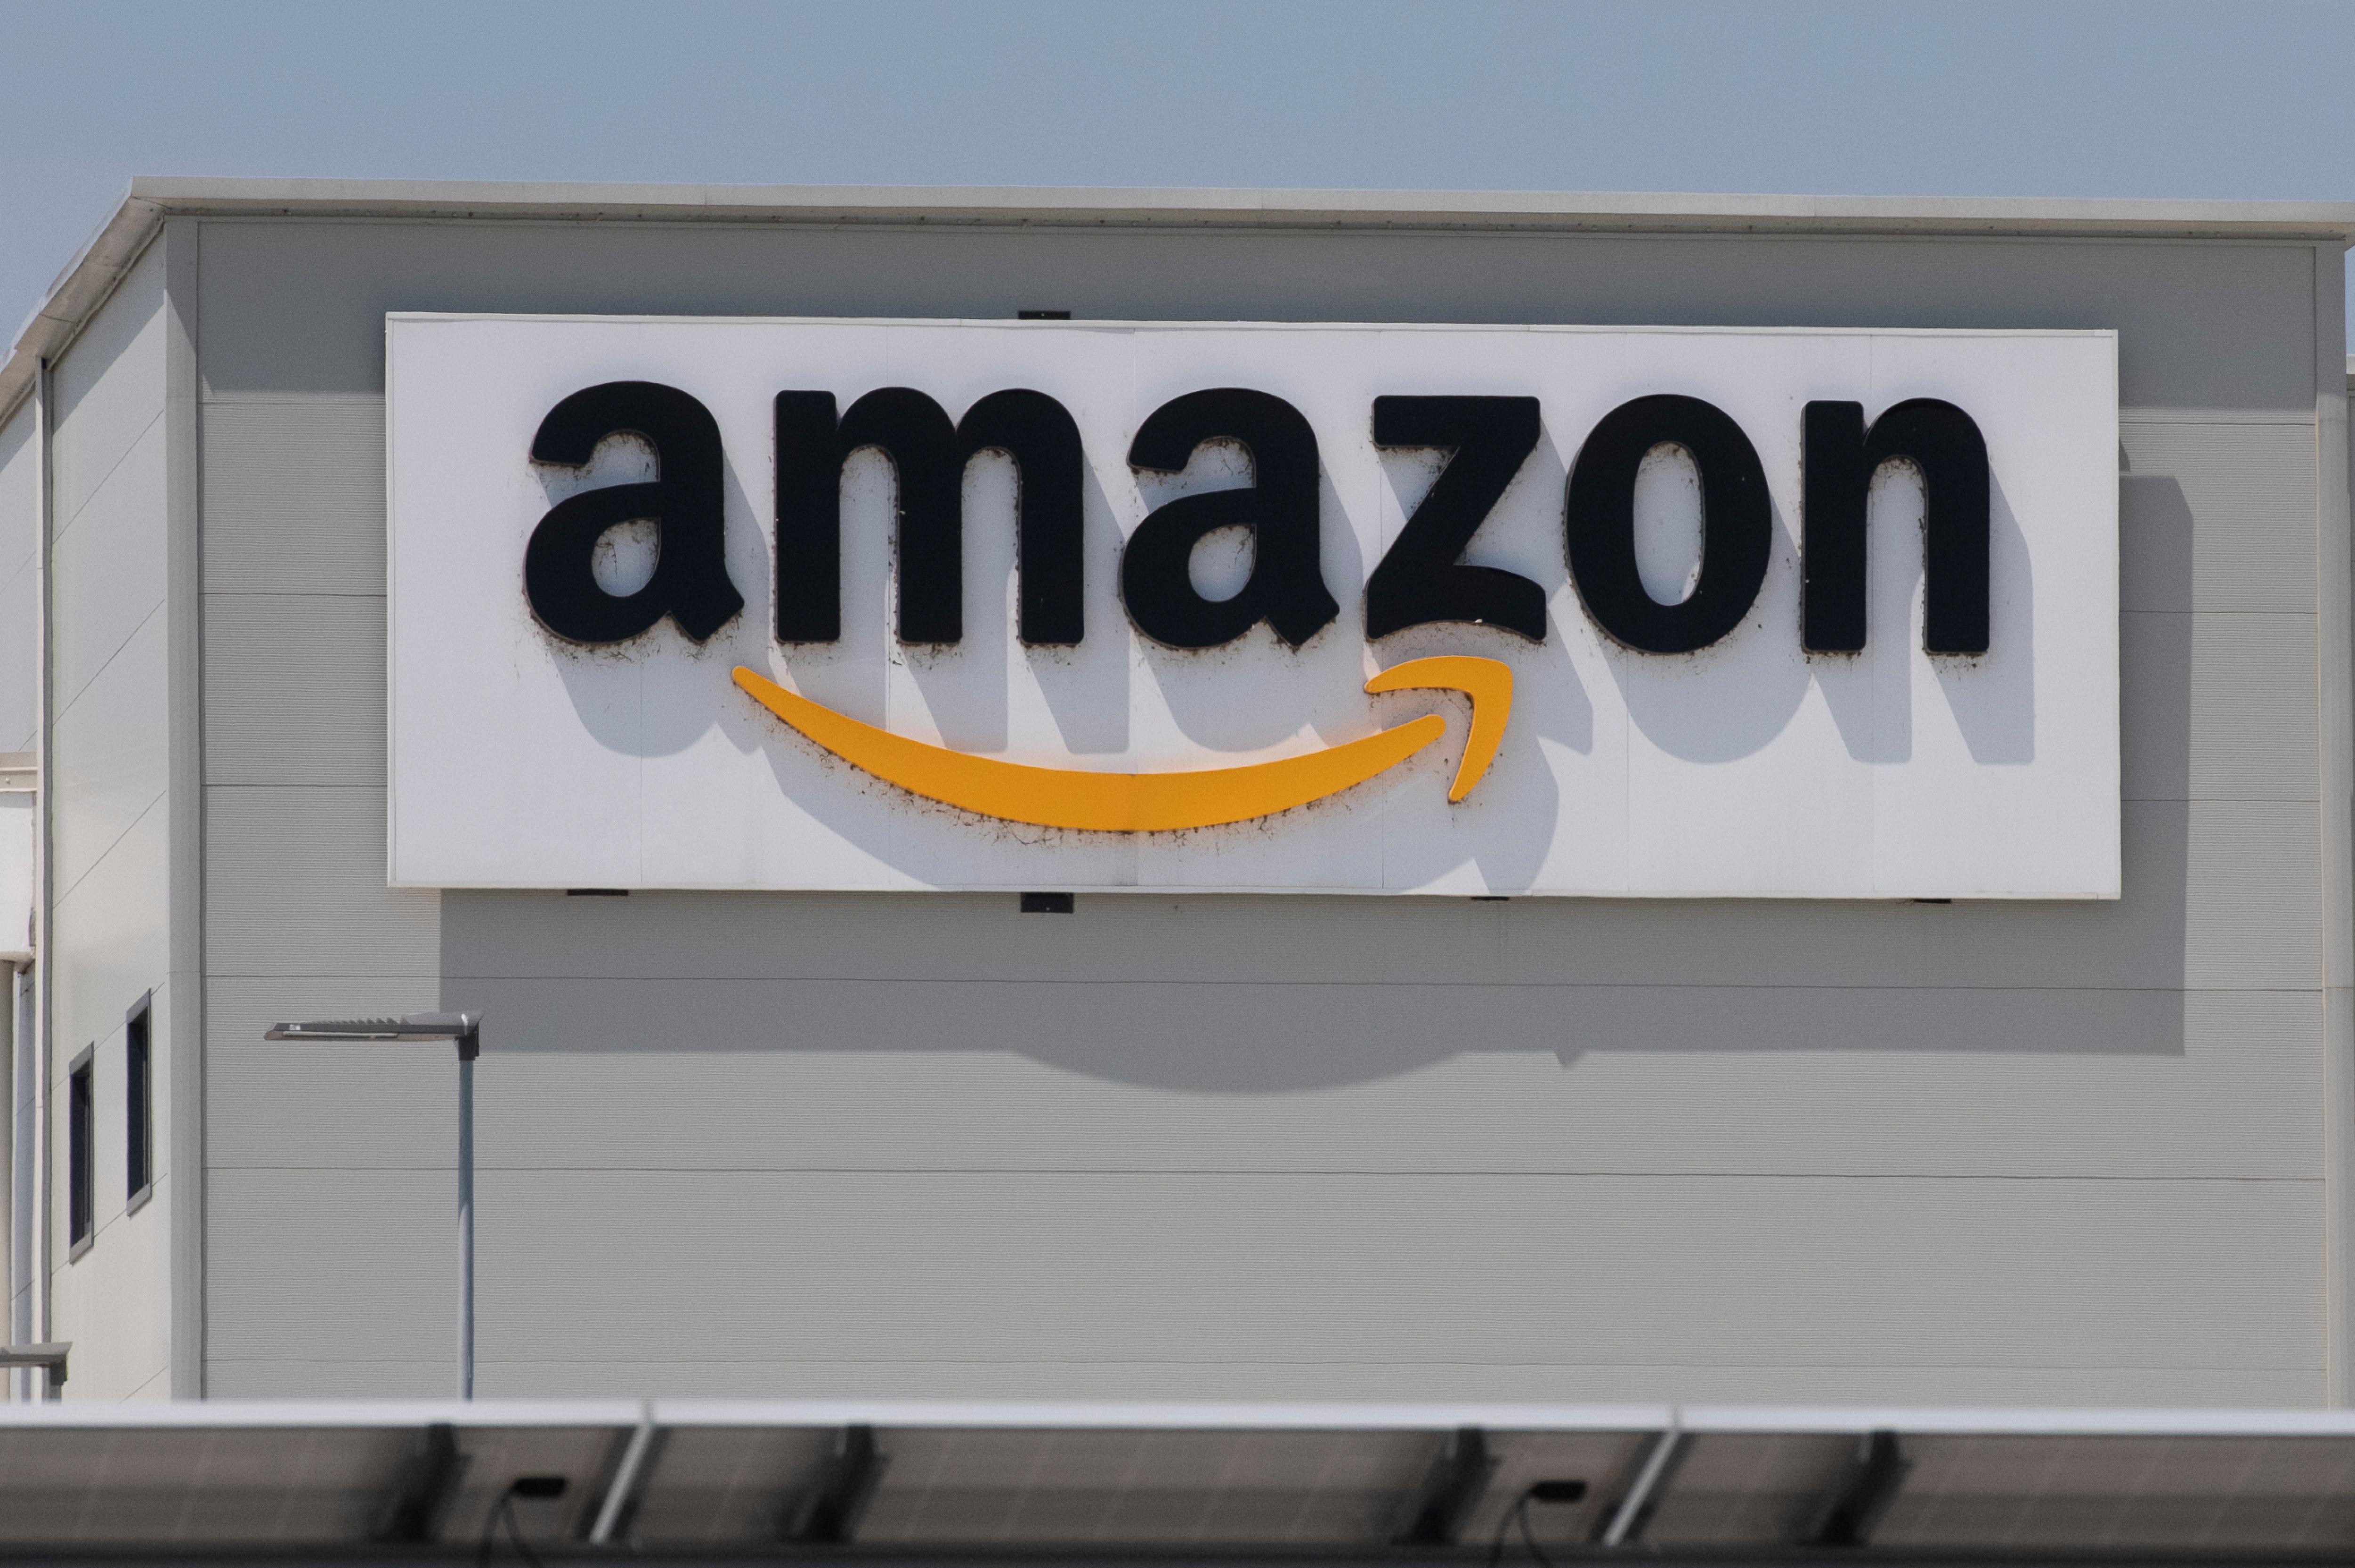 Amazon warehouse sign